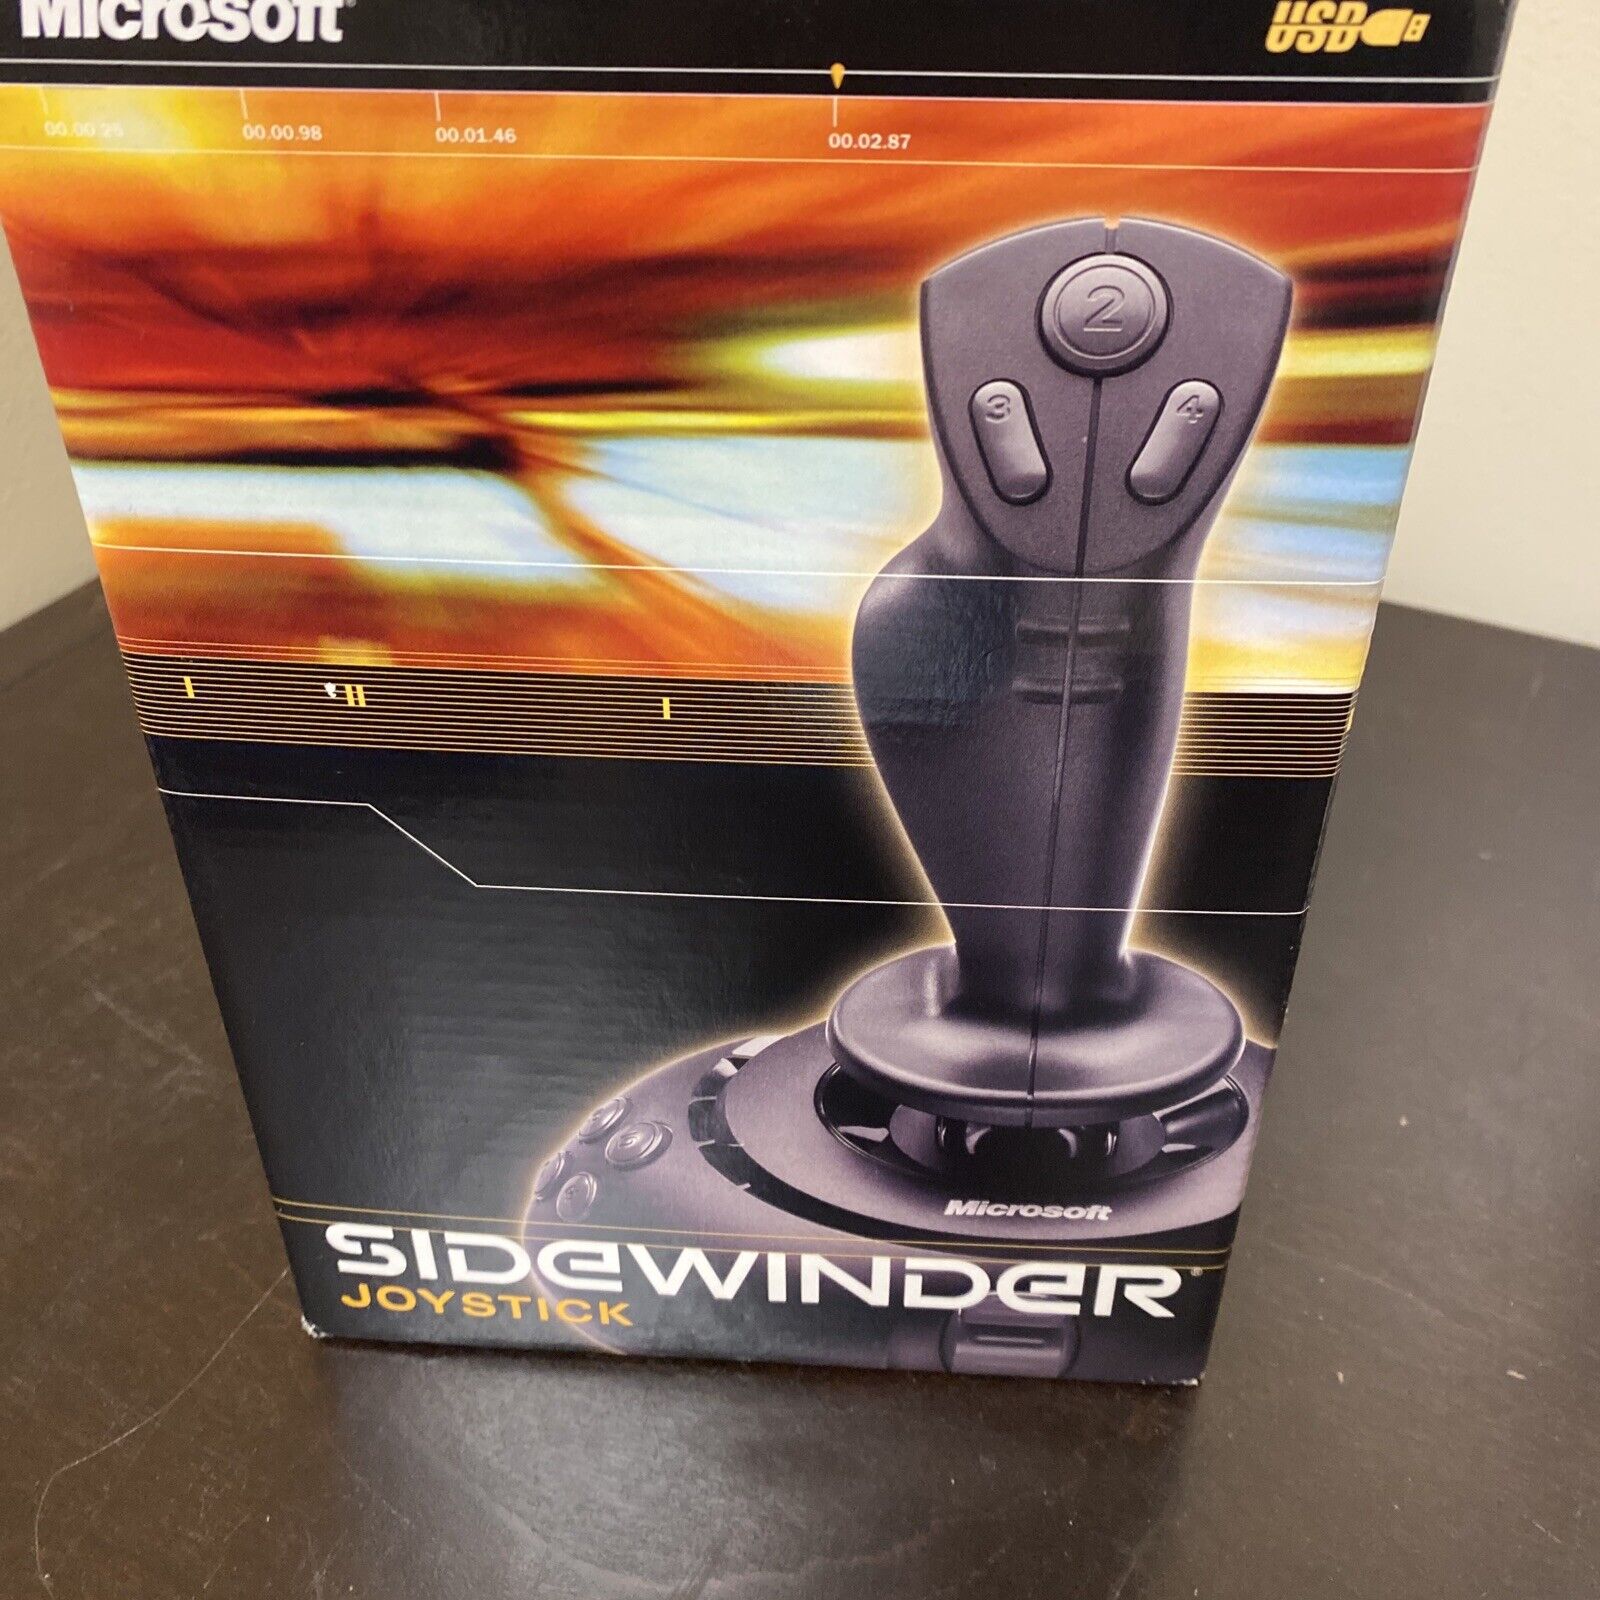 Microsoft Sidewinder 1.0 USB PC Wired Joystick New Open Box